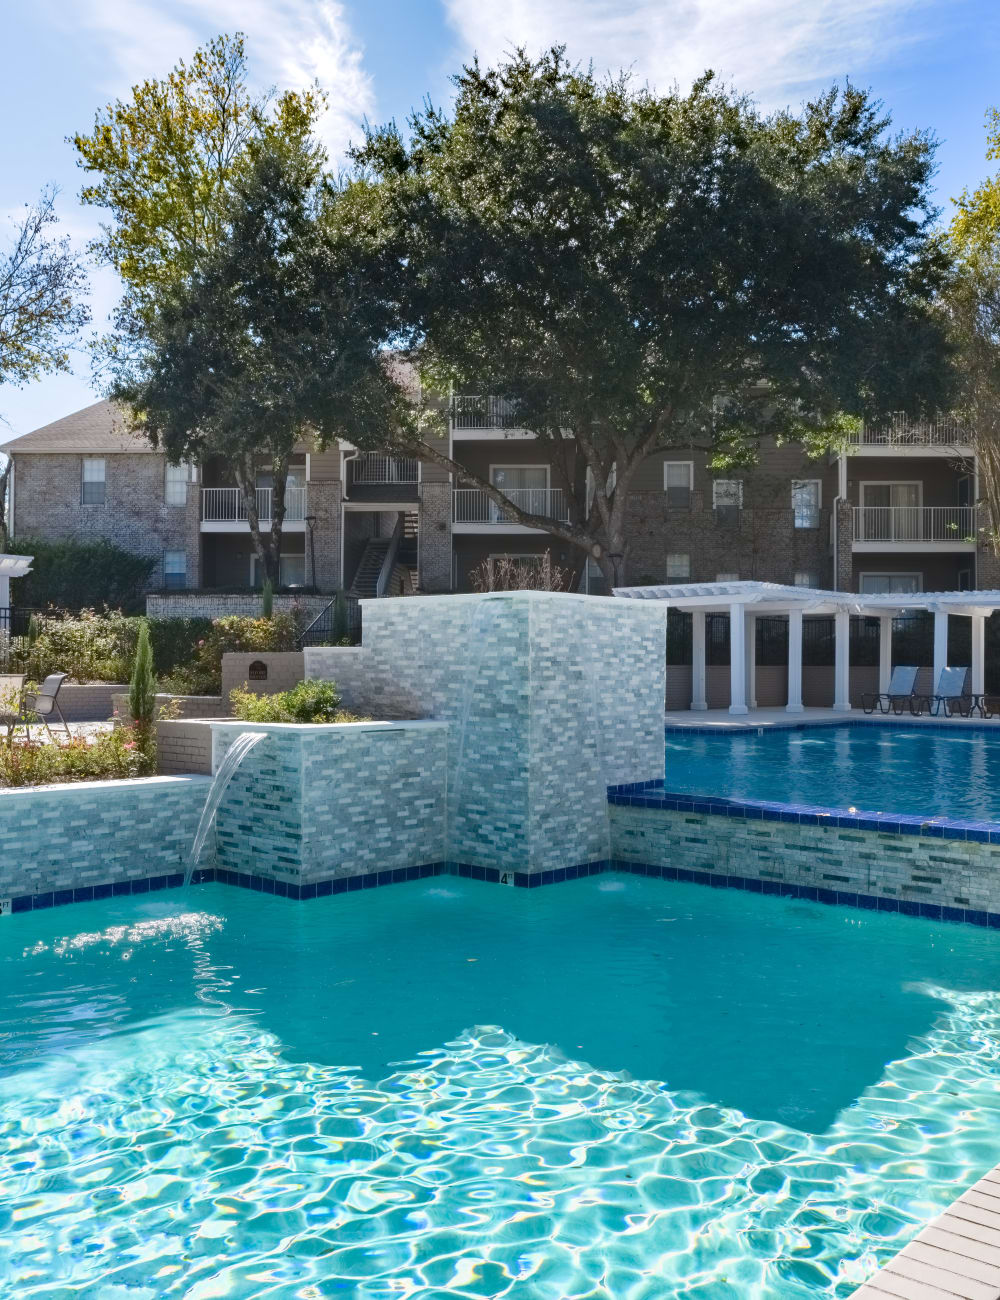 The sparkling community pool at Regency Gates in Mobile, Alabama